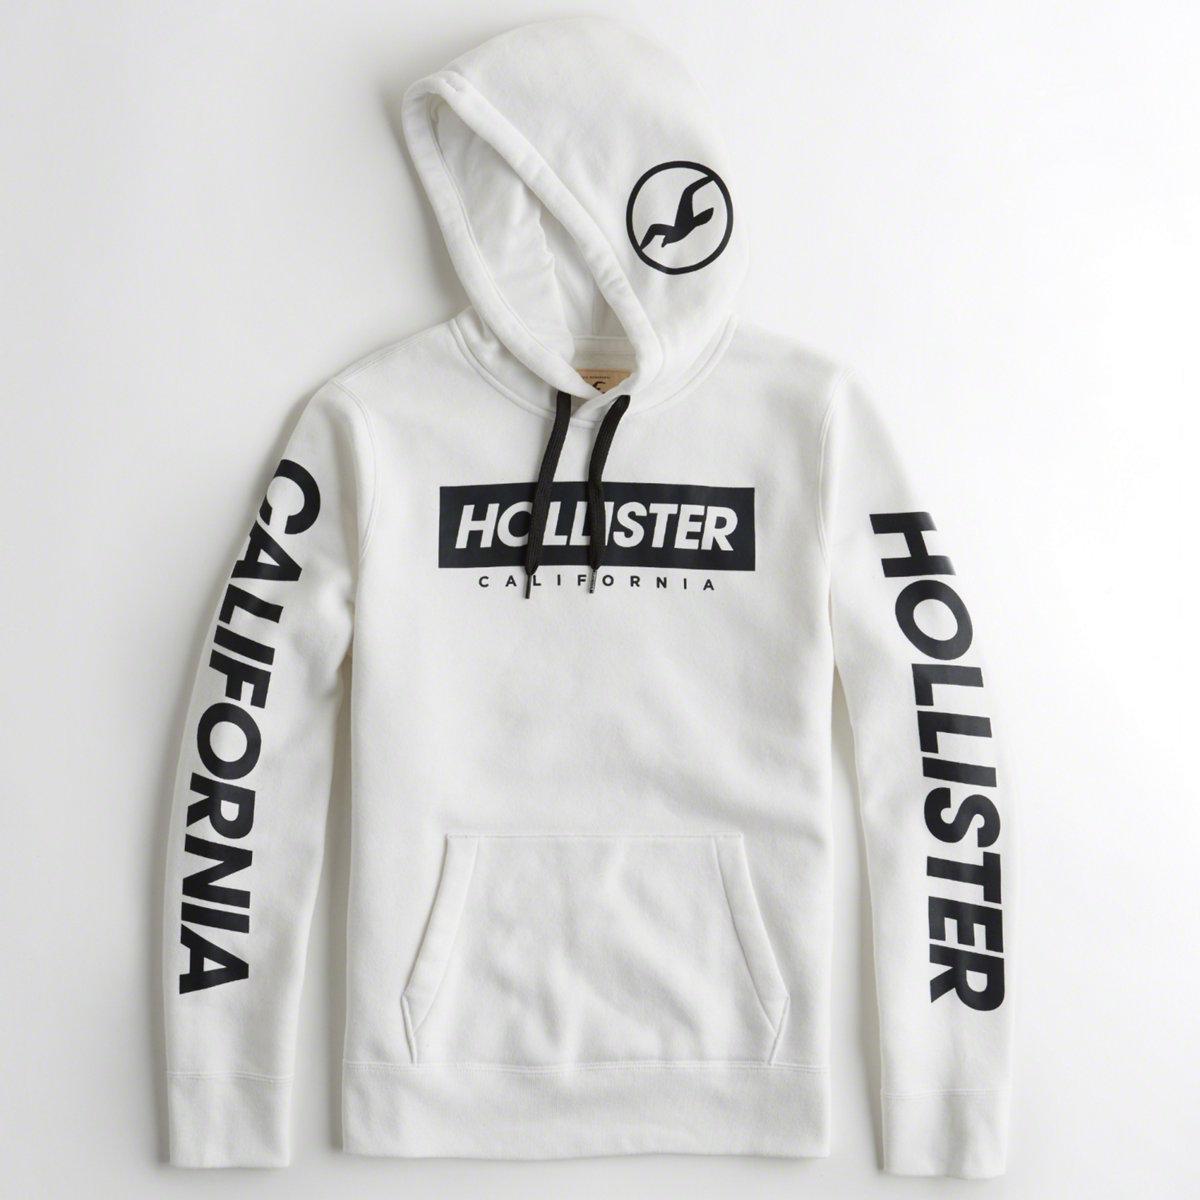 hollister hoodies sale womens